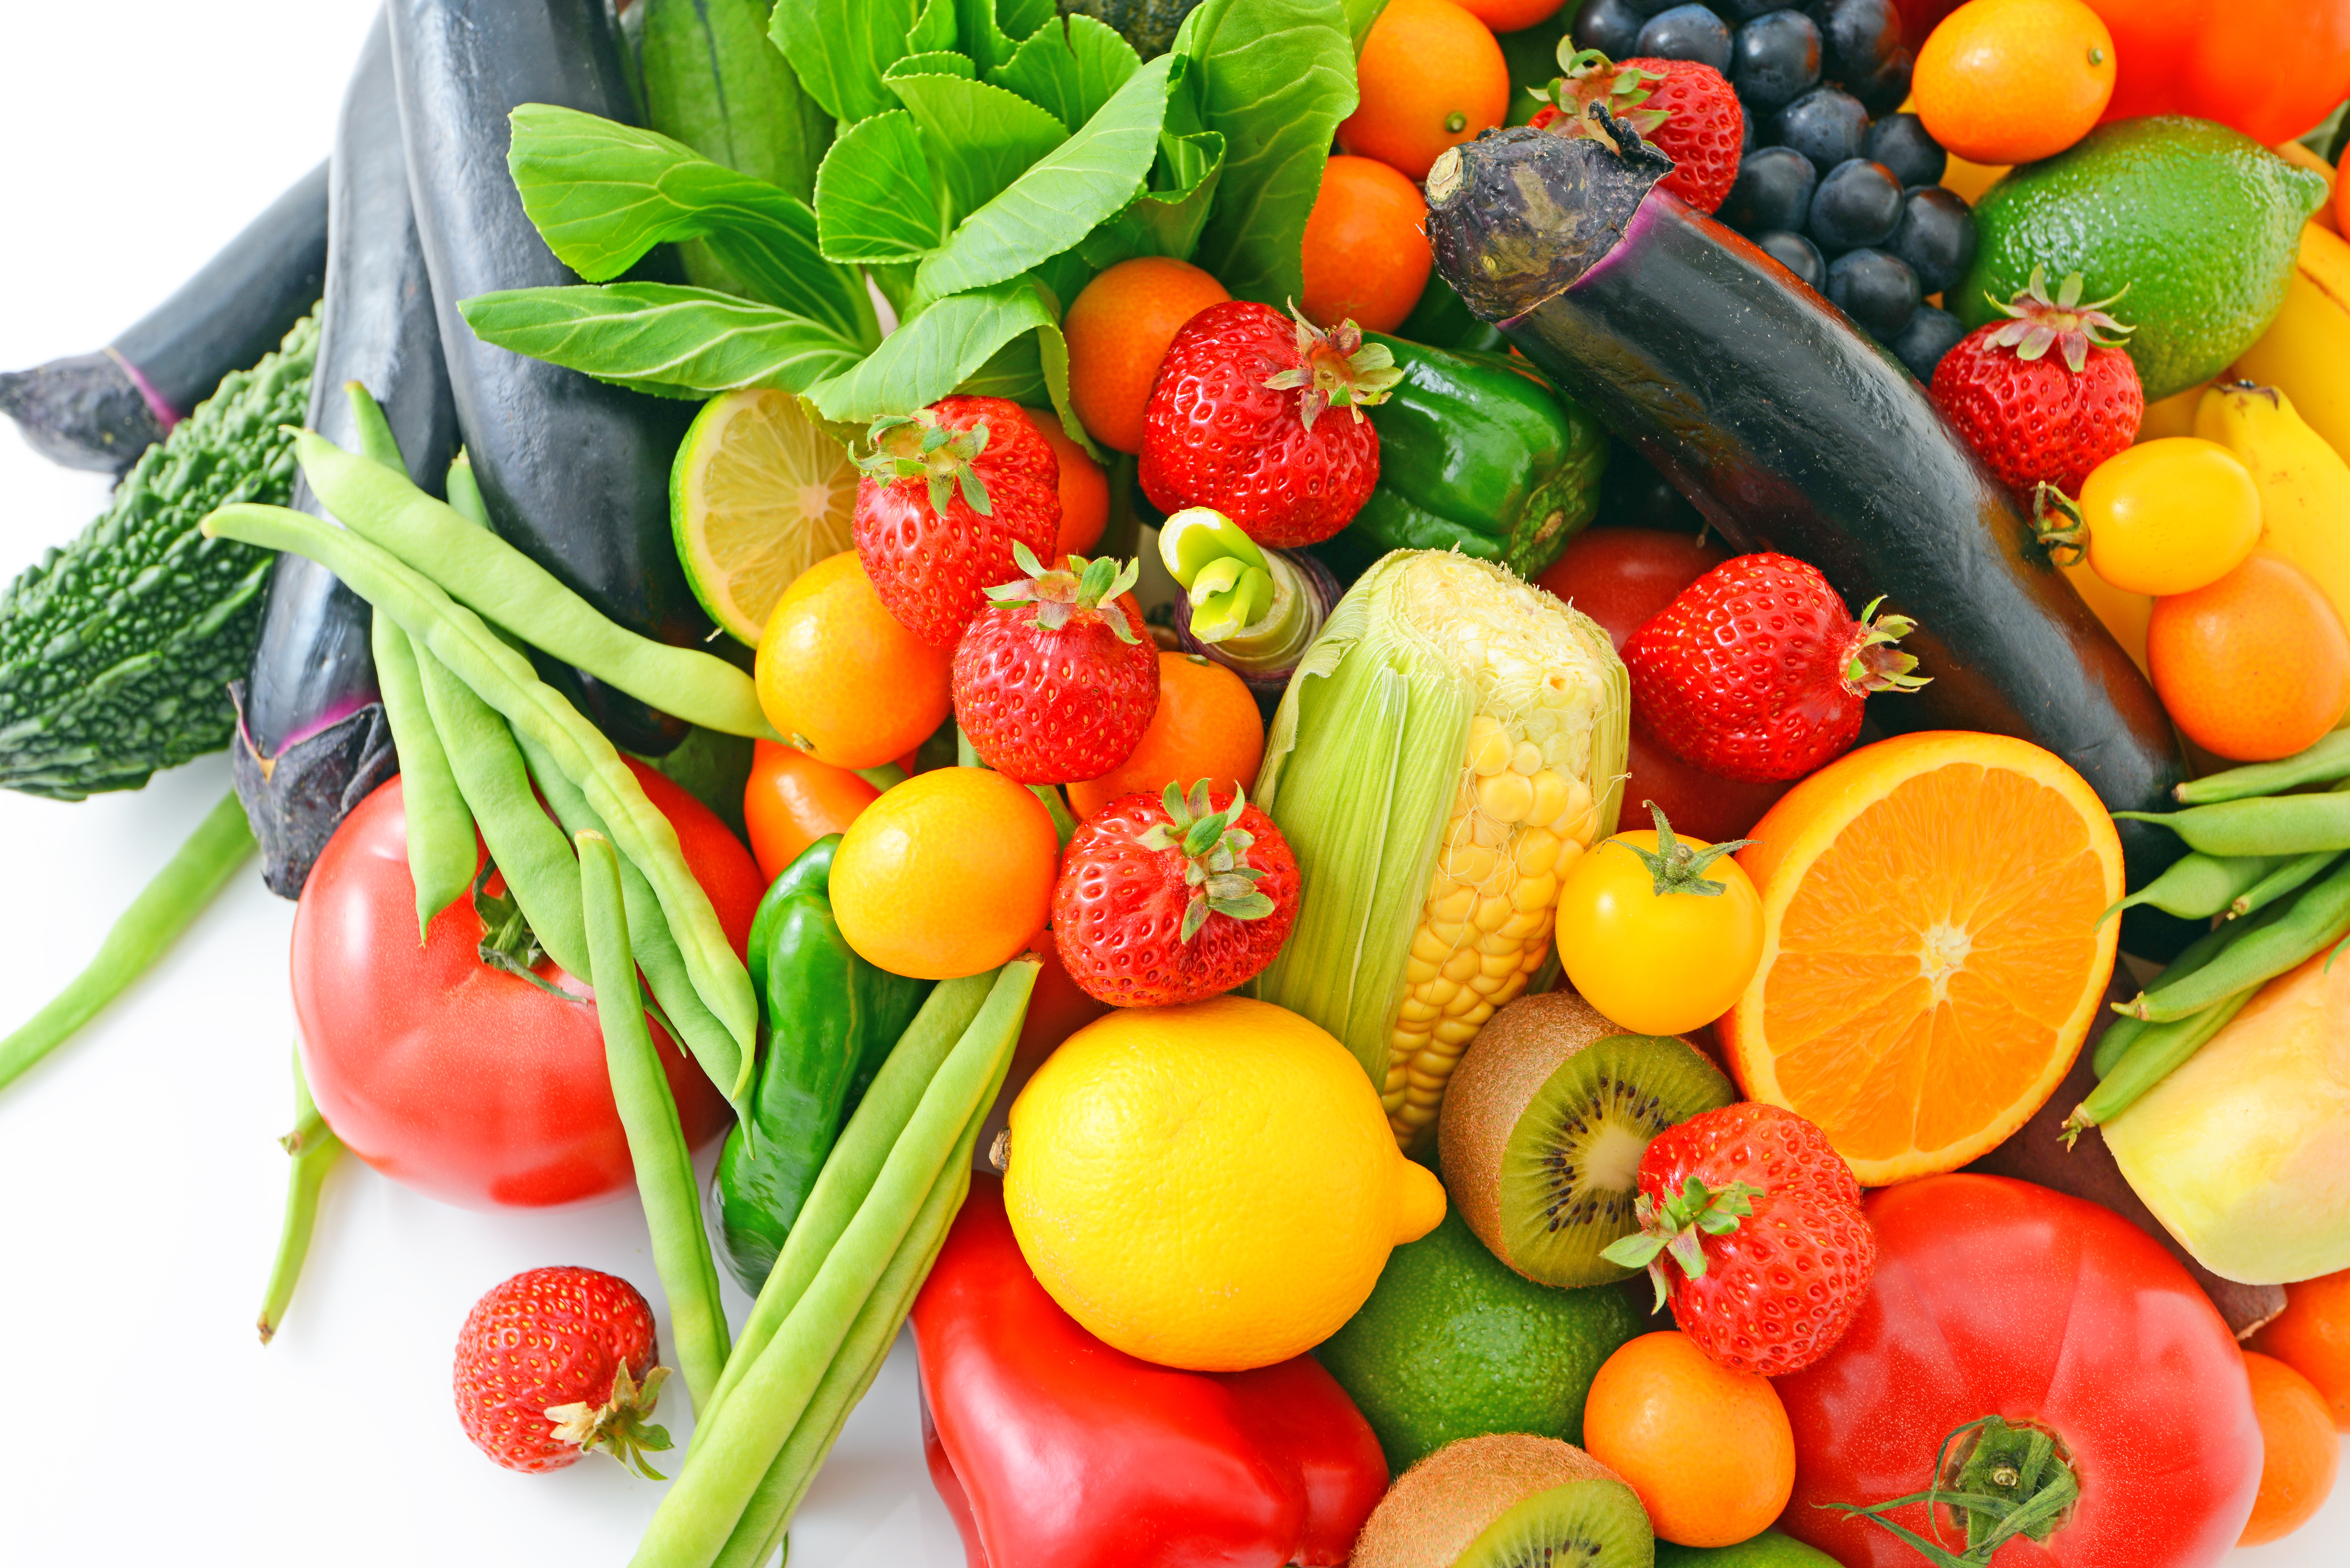 Fruits & Vegetables Wallpaper Hd - Fruits And Vegetables Images Hd - HD Wallpaper 